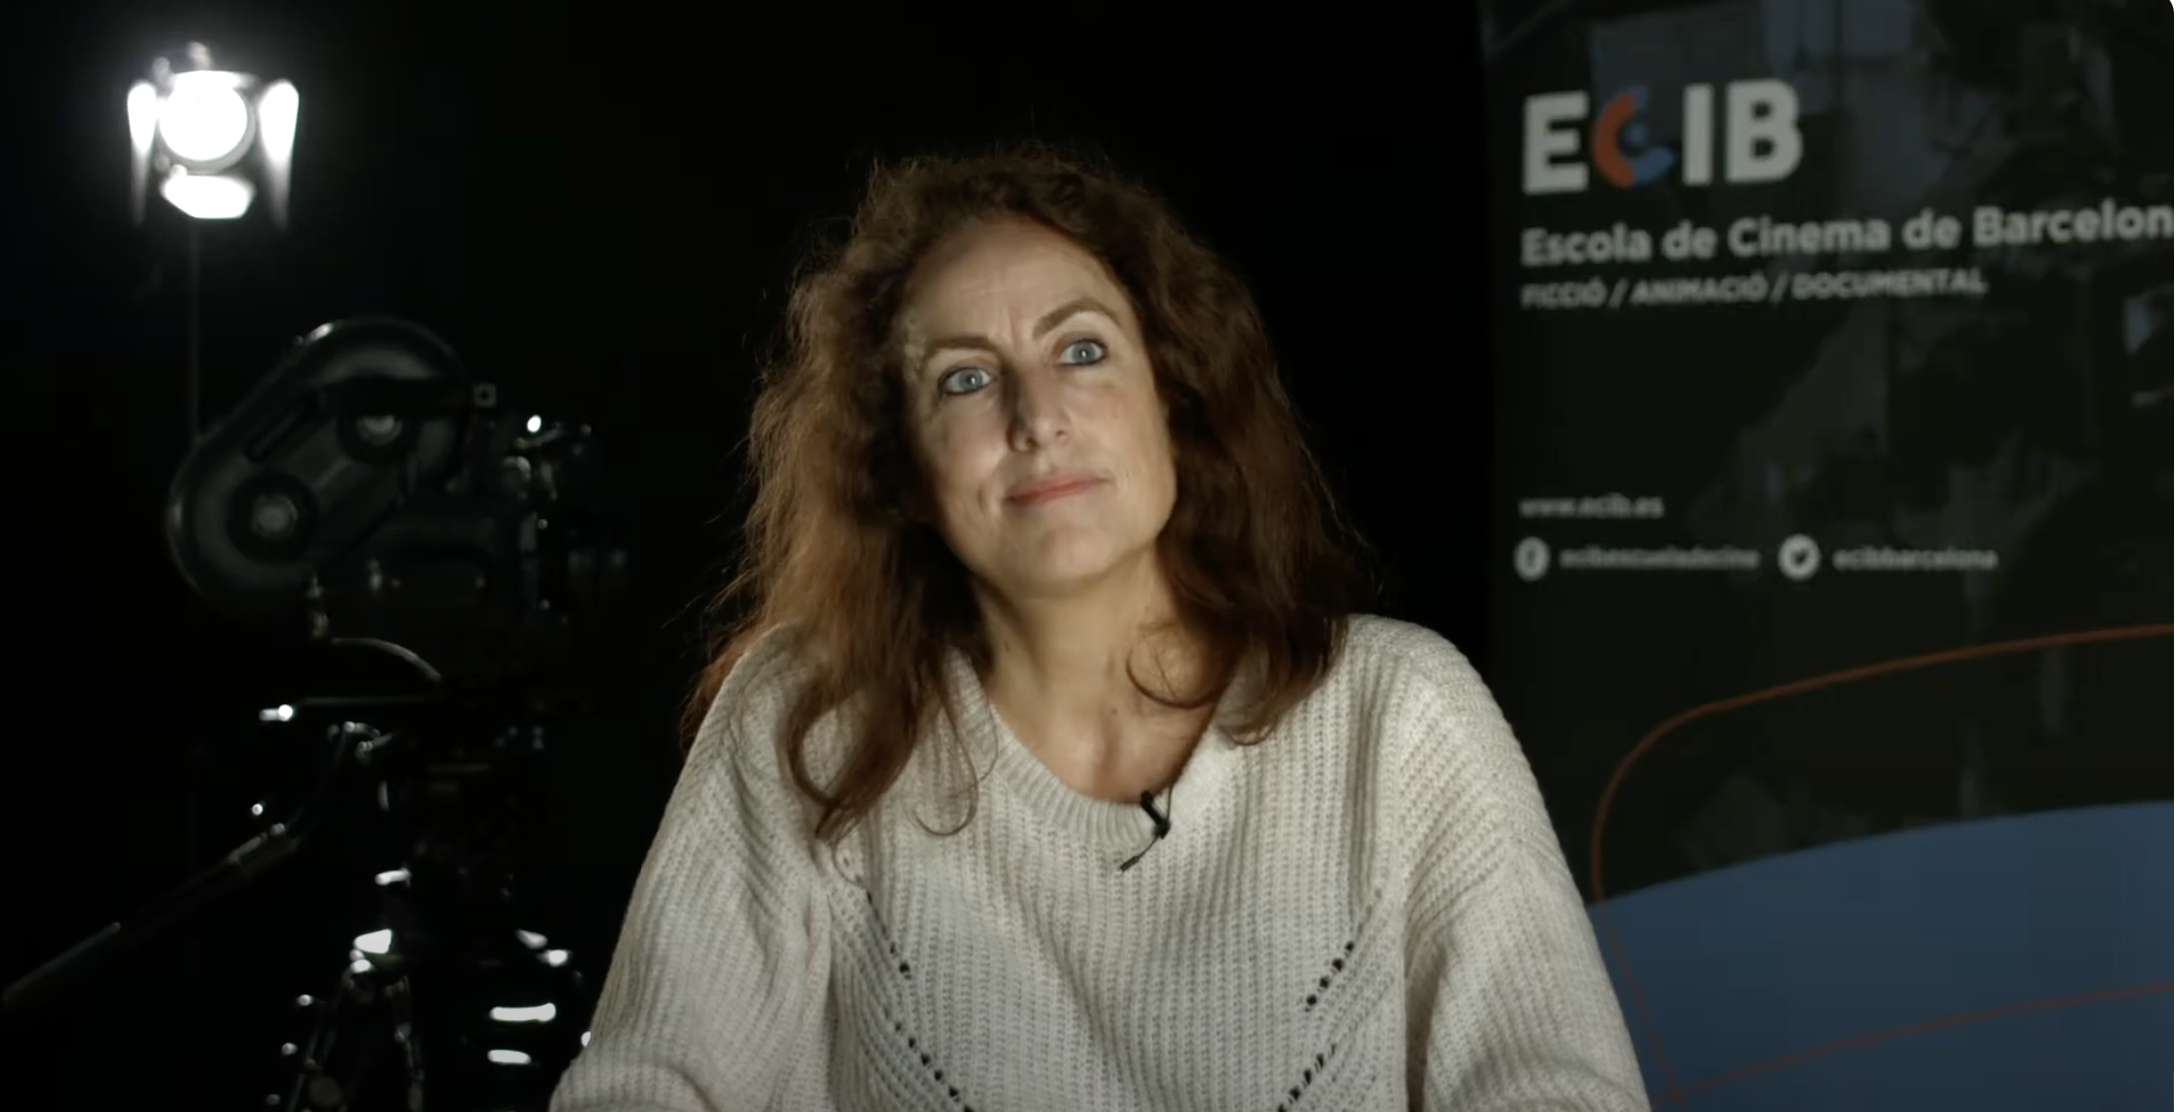 Núria Gimenez en ECIB - Escola de Cinema de Barcelona